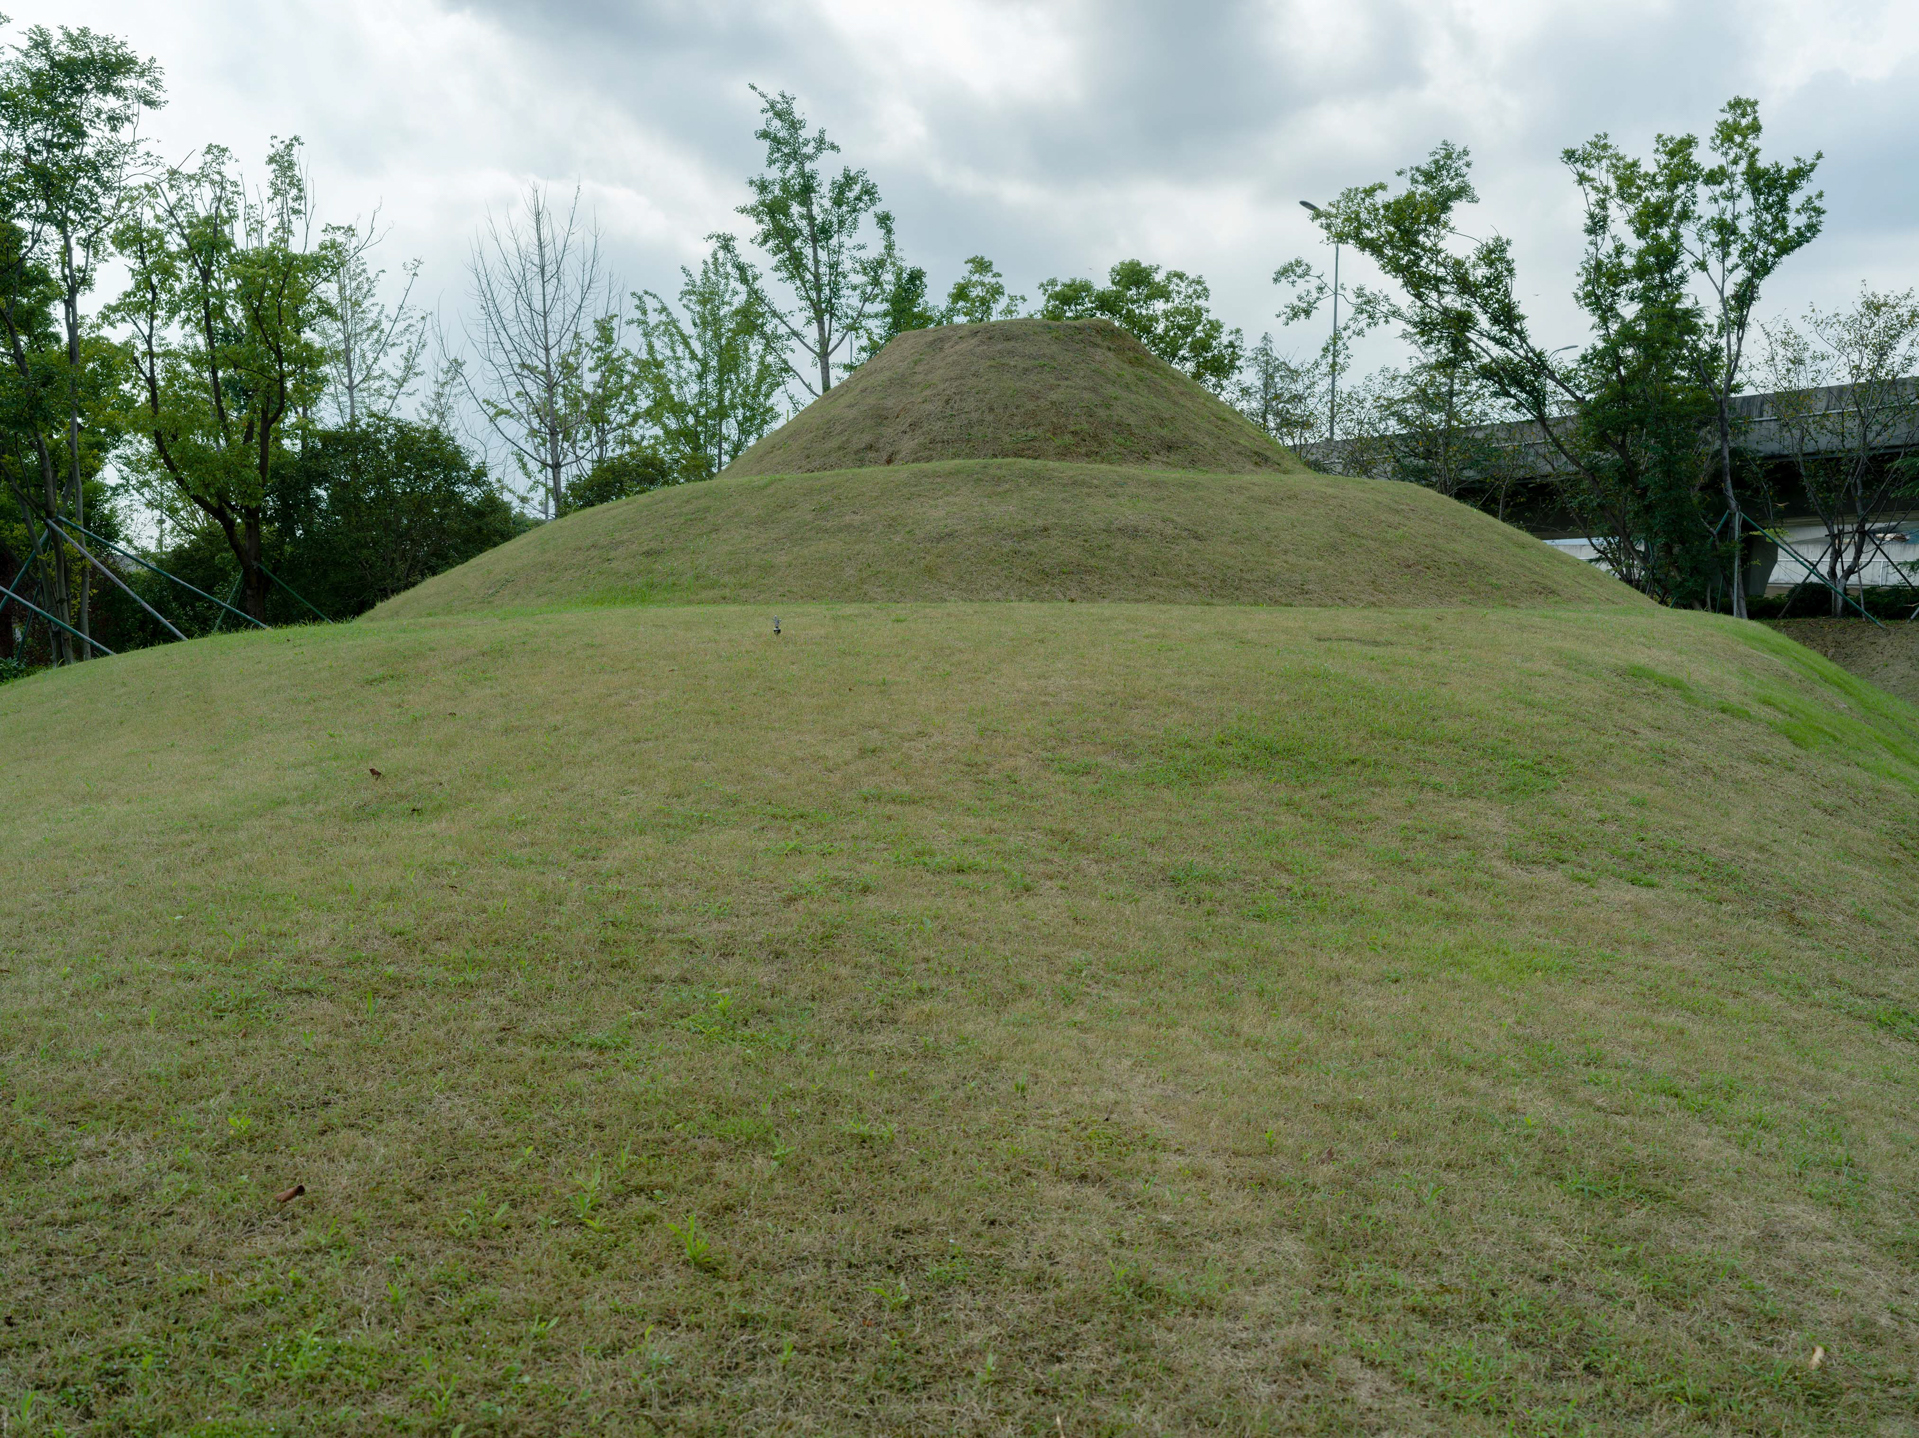 a grassy mound